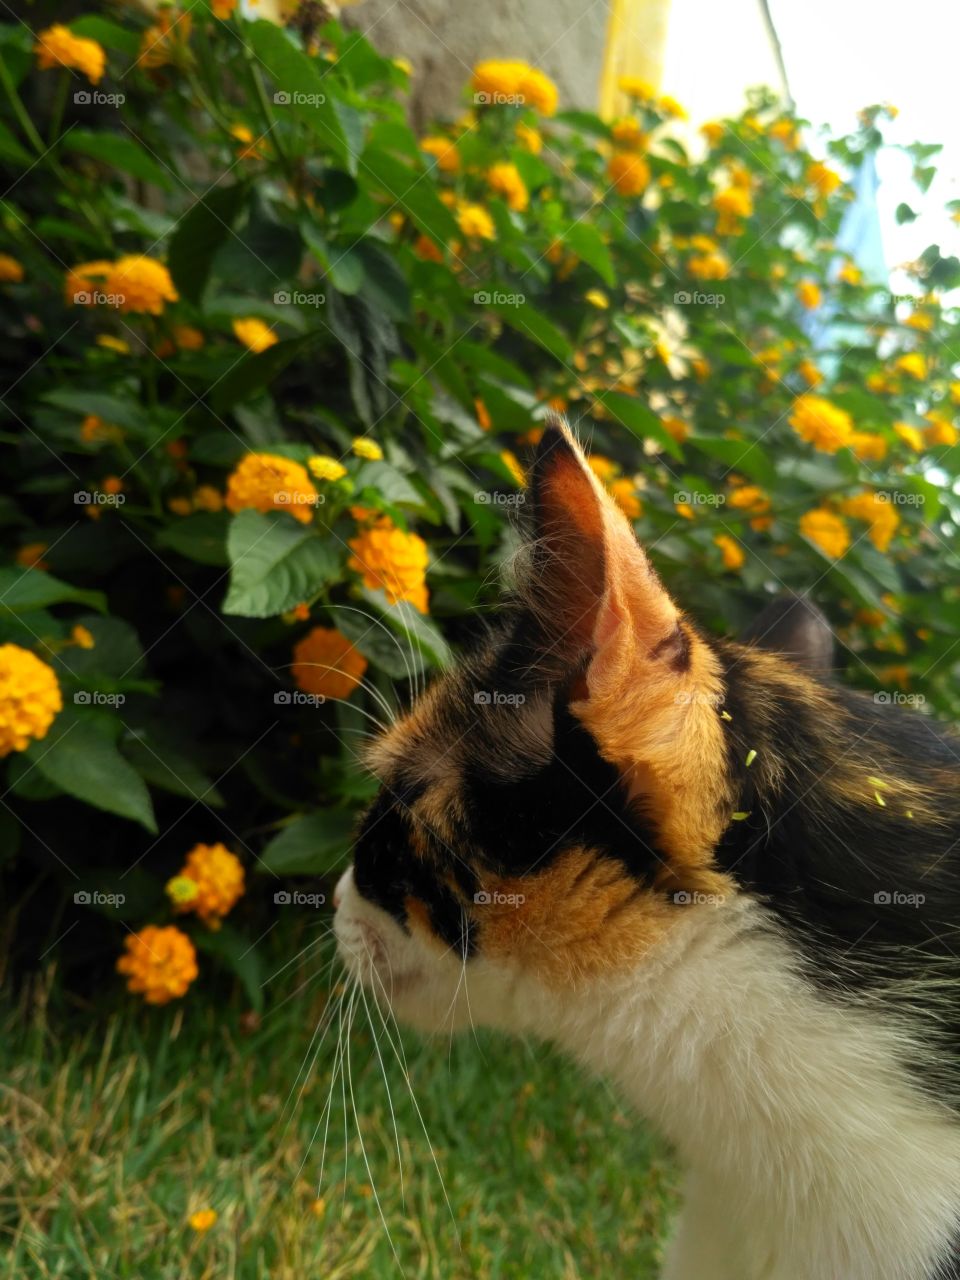 flowers in cat